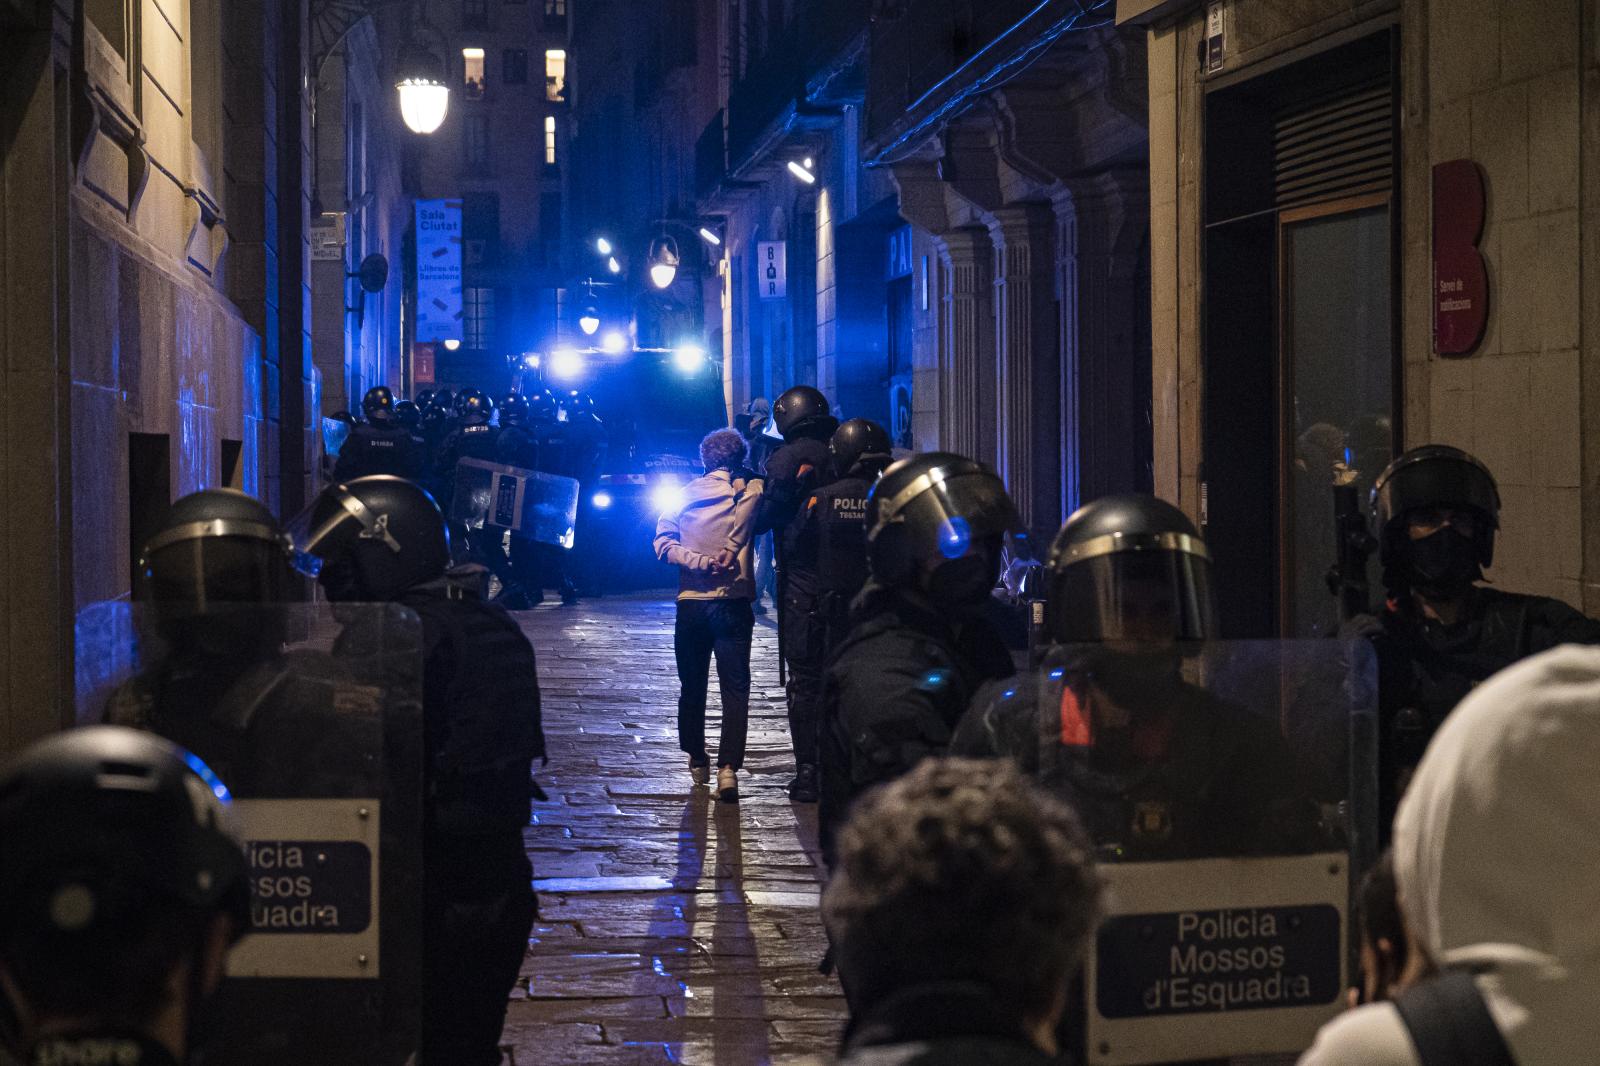 Image from DAILY NEWS - Mossos de Esquadra arrest a demonstrator in Barcelona...